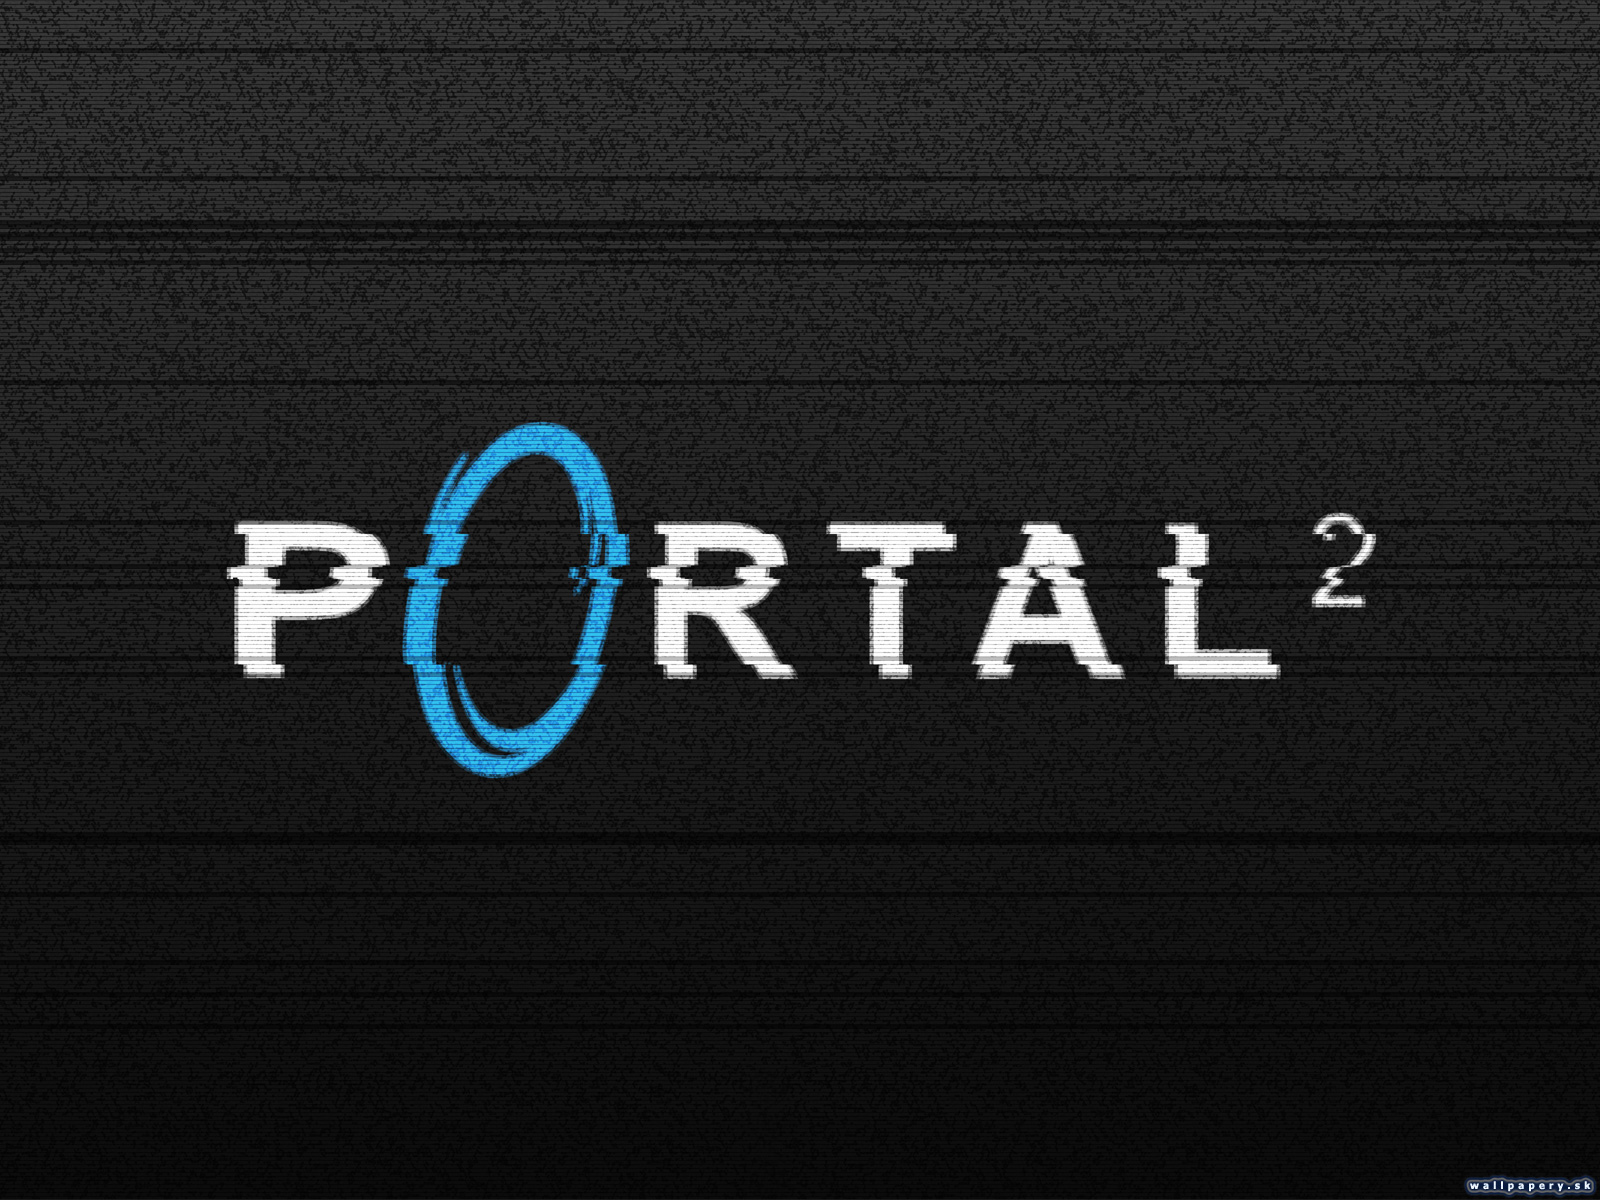 Portal usue. Portal 2 обои. Портал 2 фото на обои. Портал надпись. Портал обои на телефон.